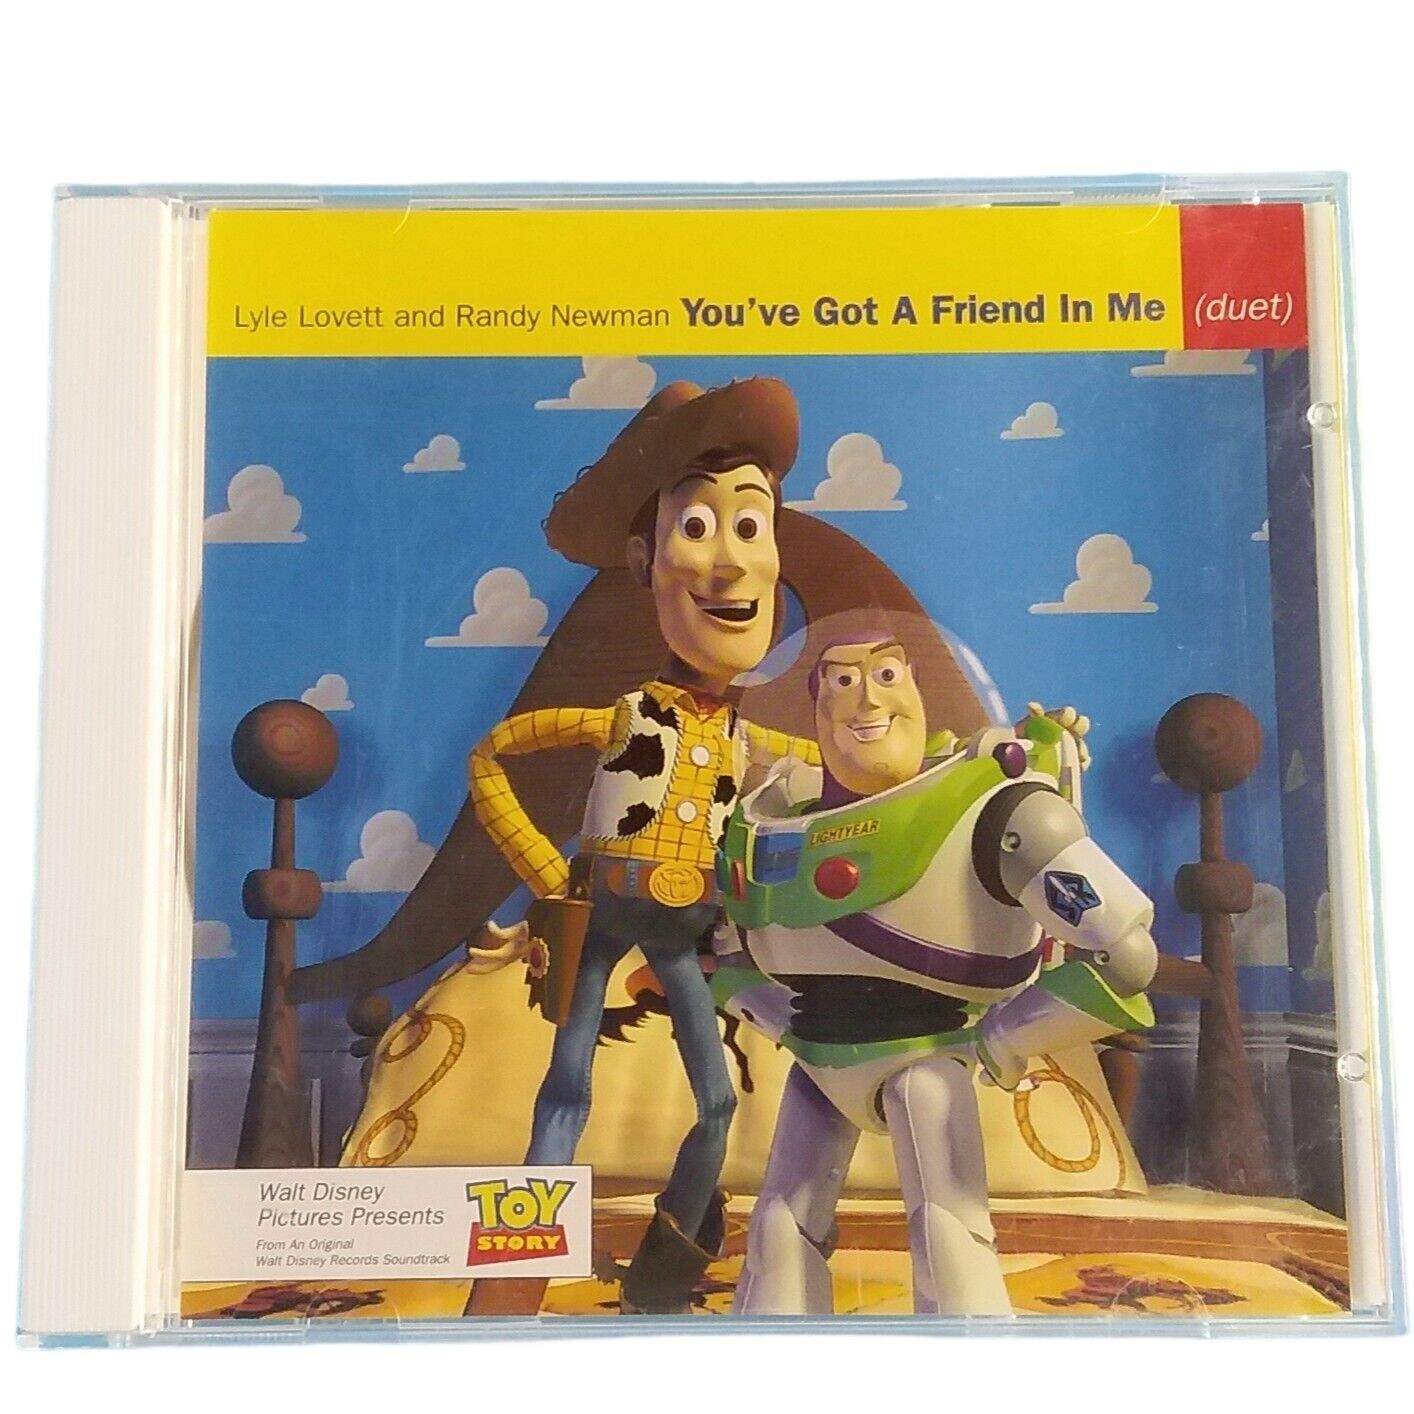 Disney's Toy Story CD Promo 1995 You've Got A Friend In Me Single Lyle Lovett